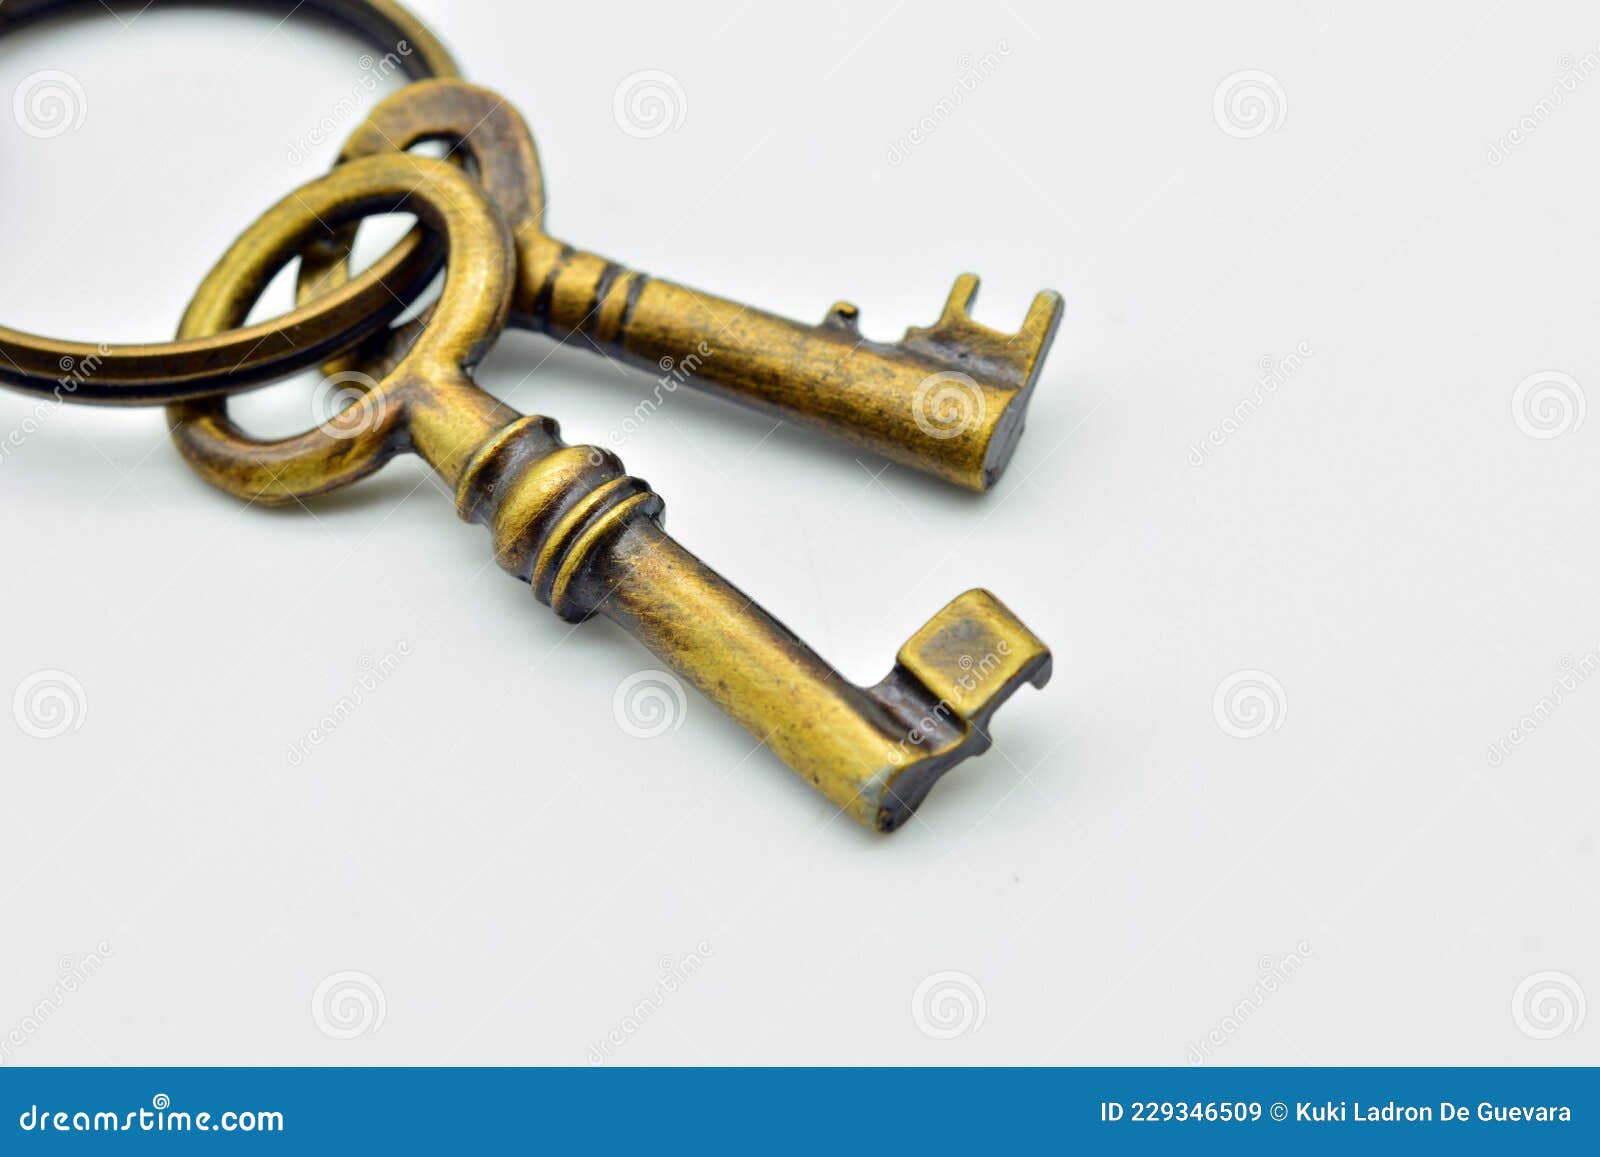 keychain with old keys